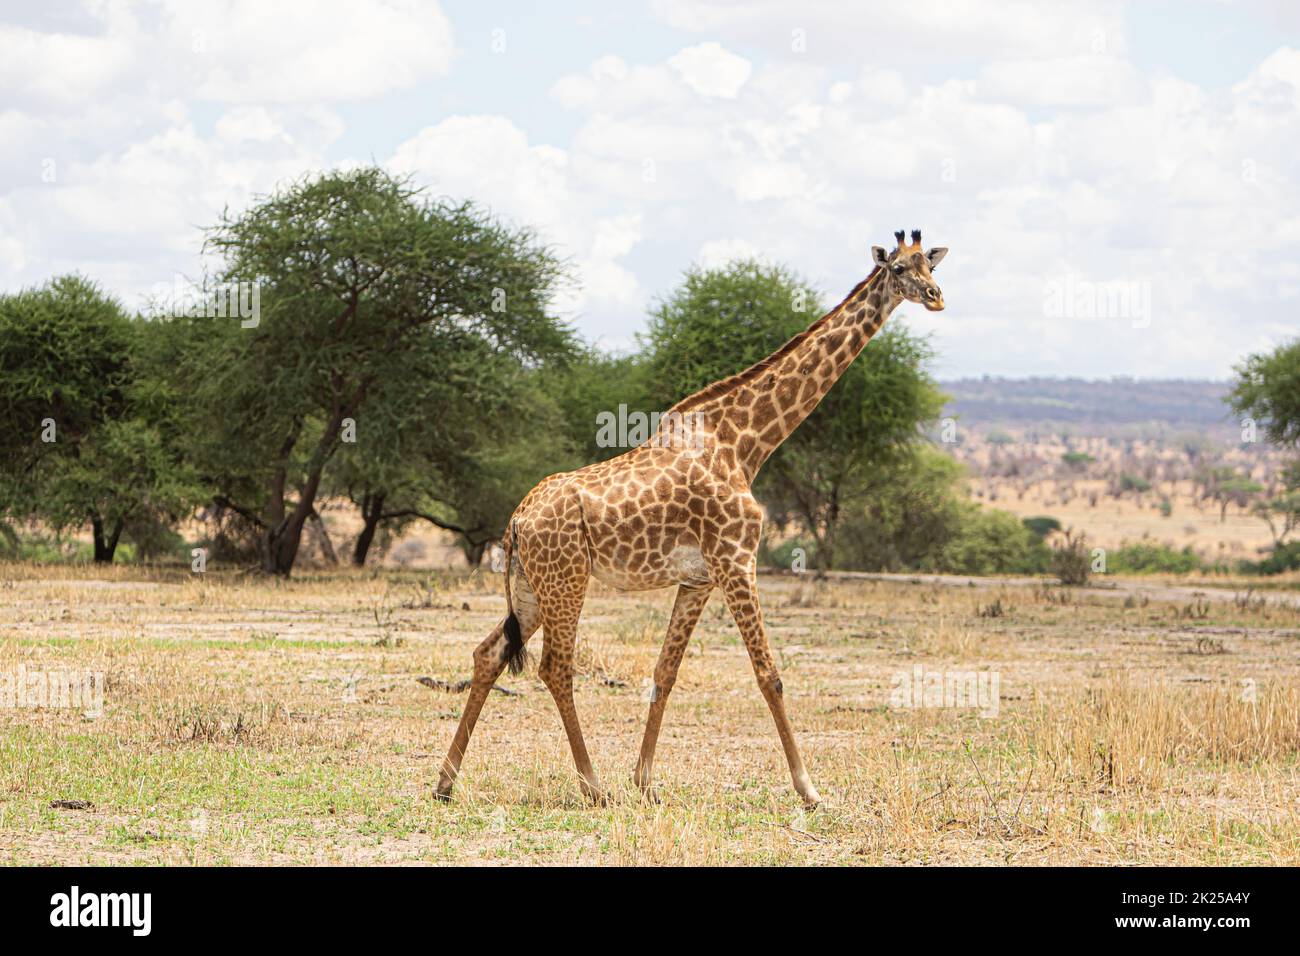 Giraffe fotografiert während einer touristischen Safari im Tarangire Nationalpark, Manyara Region Tansania. Stockfoto